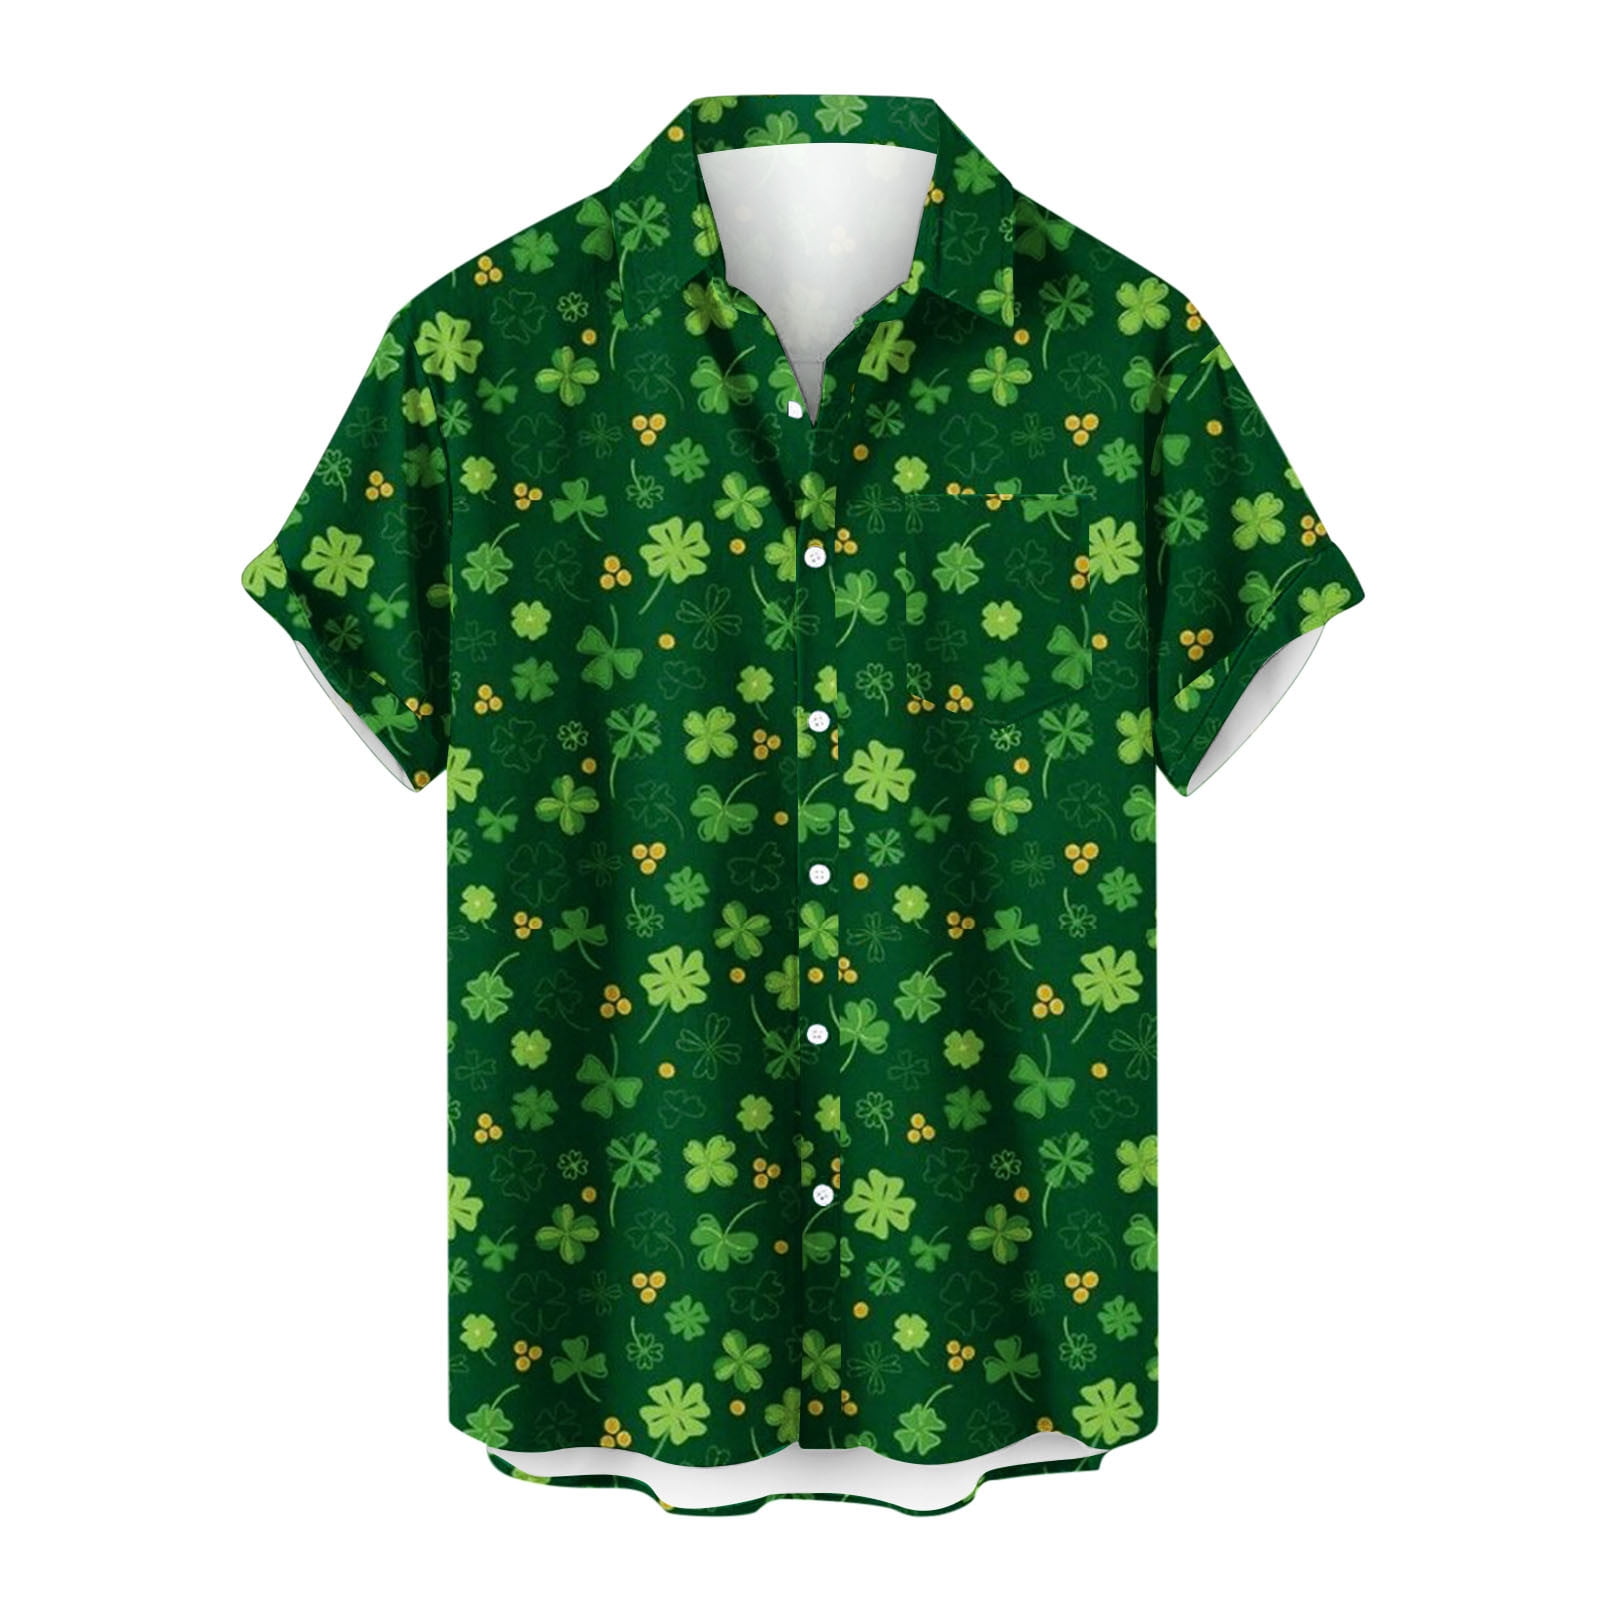 YanHoo St Patricks Day Shirts Funny Button Down Shirt Men Short Sleeve ...